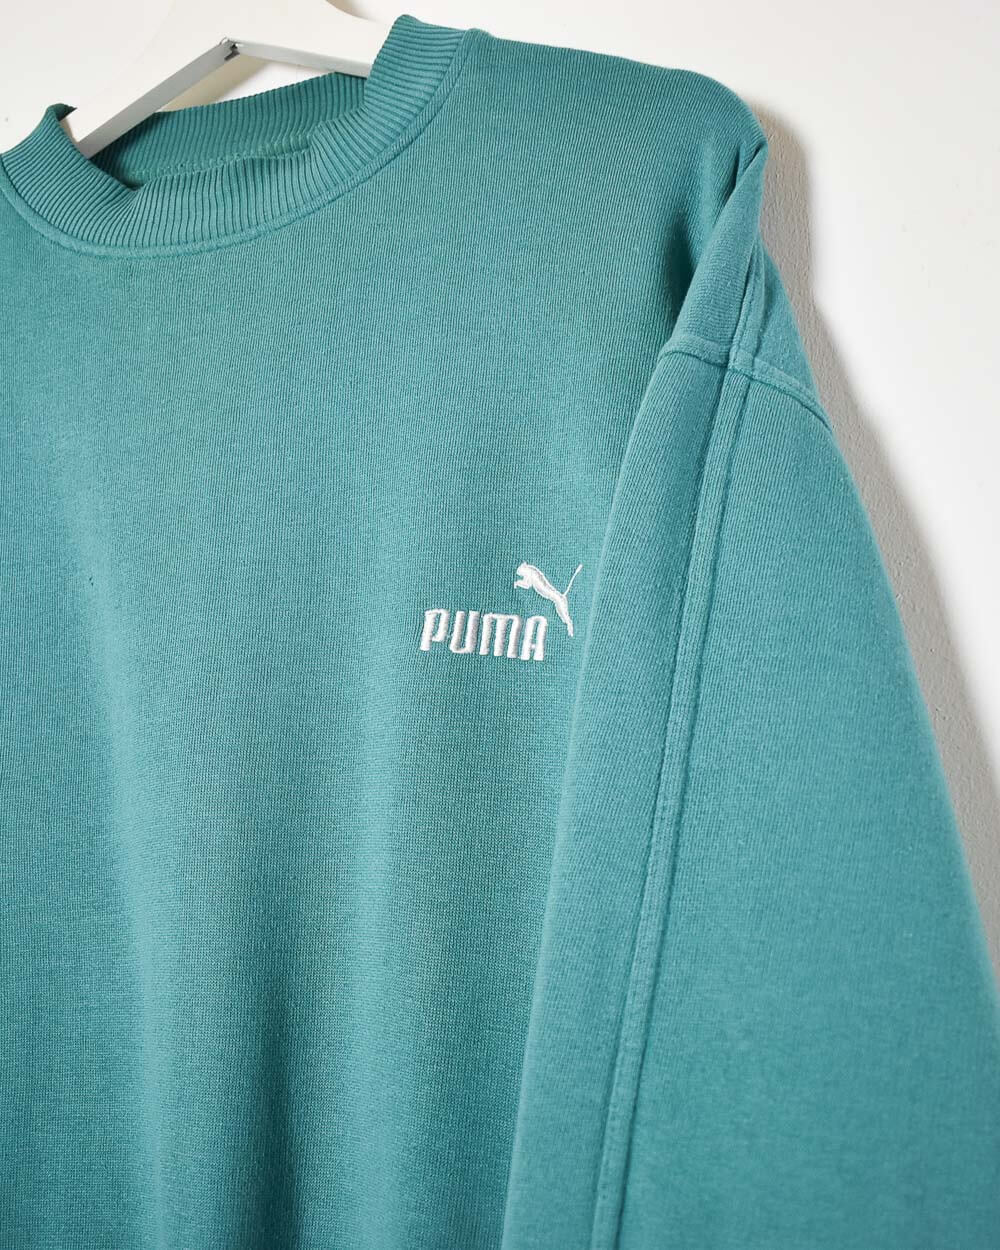 Green Puma Sweatshirt - Medium